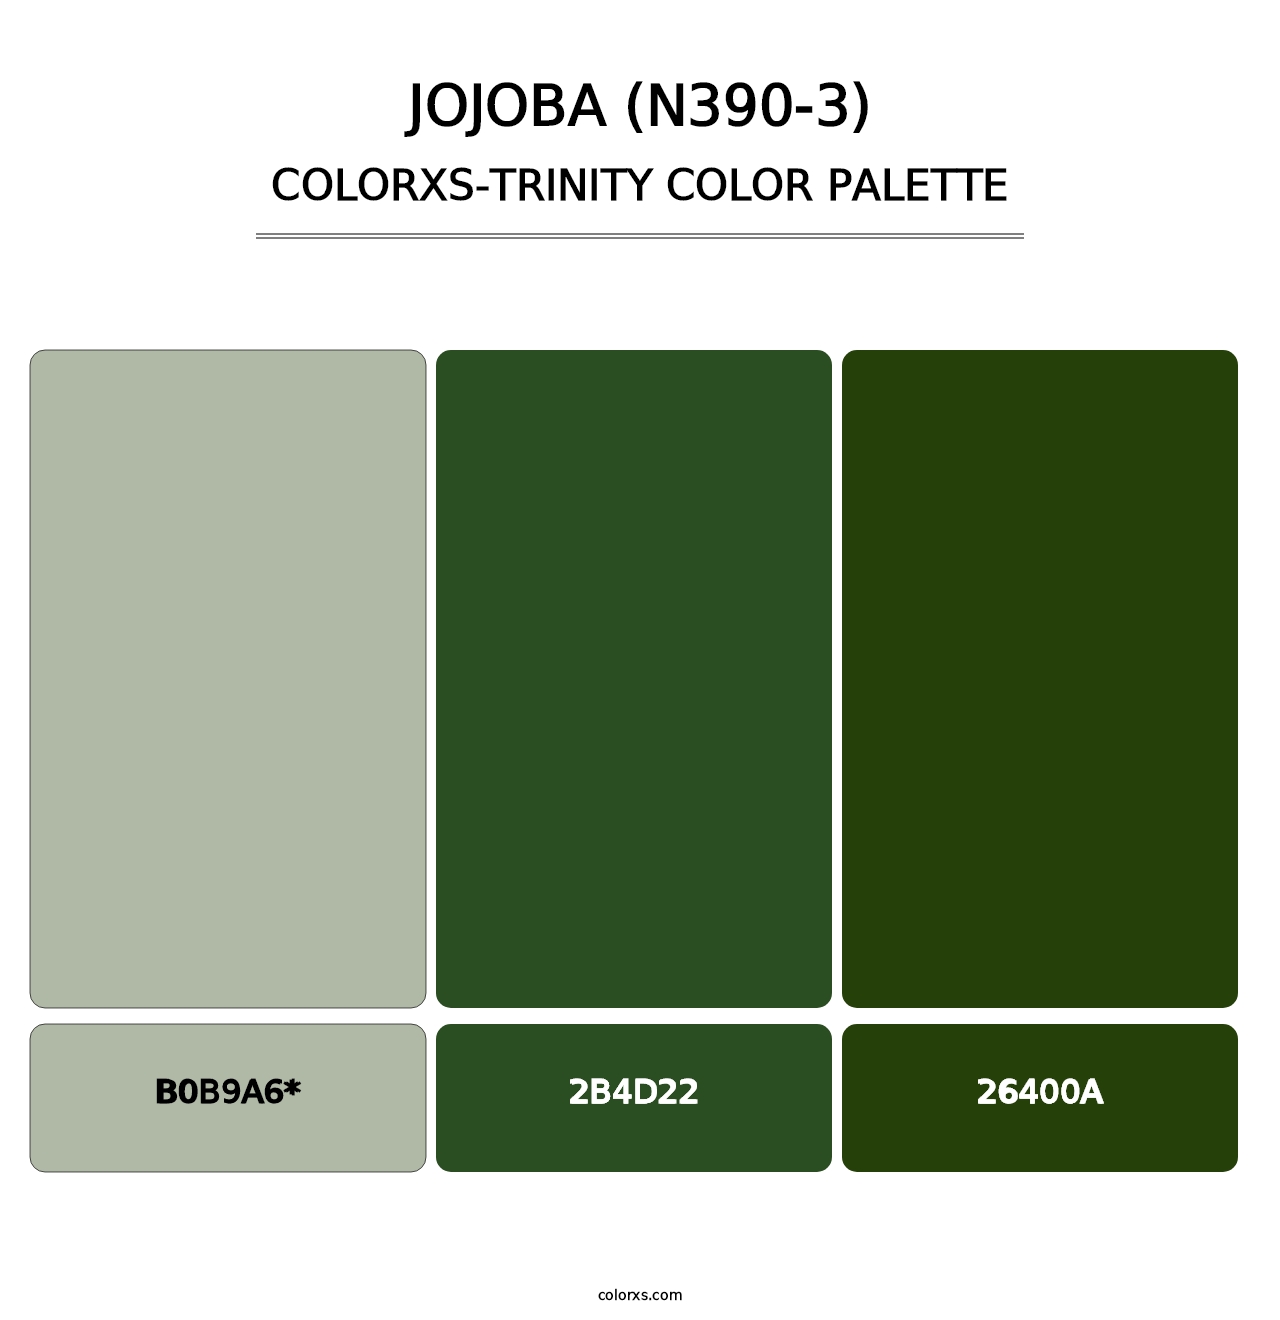 Jojoba (N390-3) - Colorxs Trinity Palette